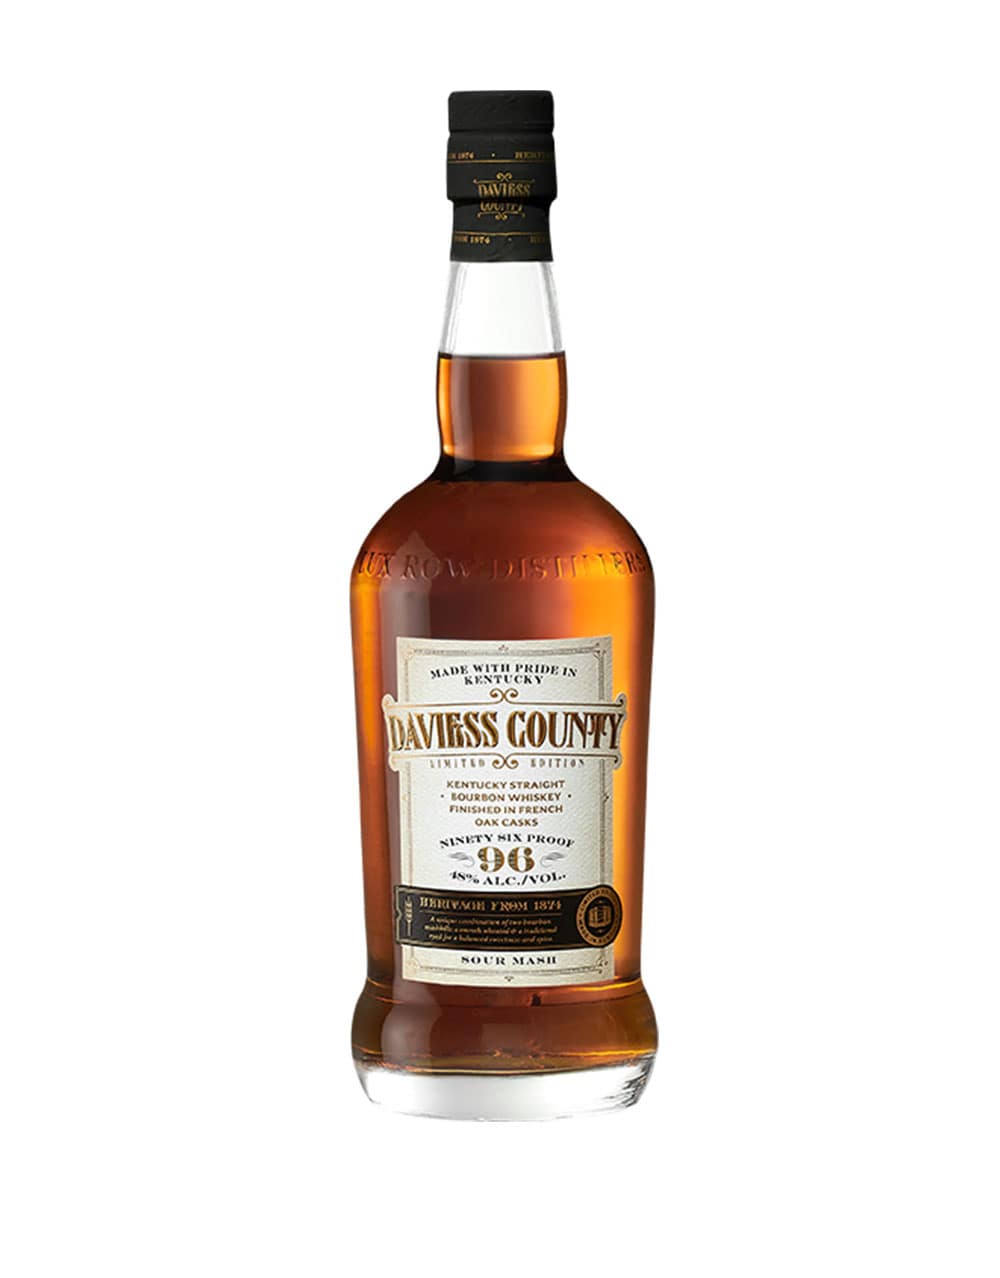 Daviess County sour mash 96 proof limited edition Oak Casks Kentucky Straight Bourbon Whiskey